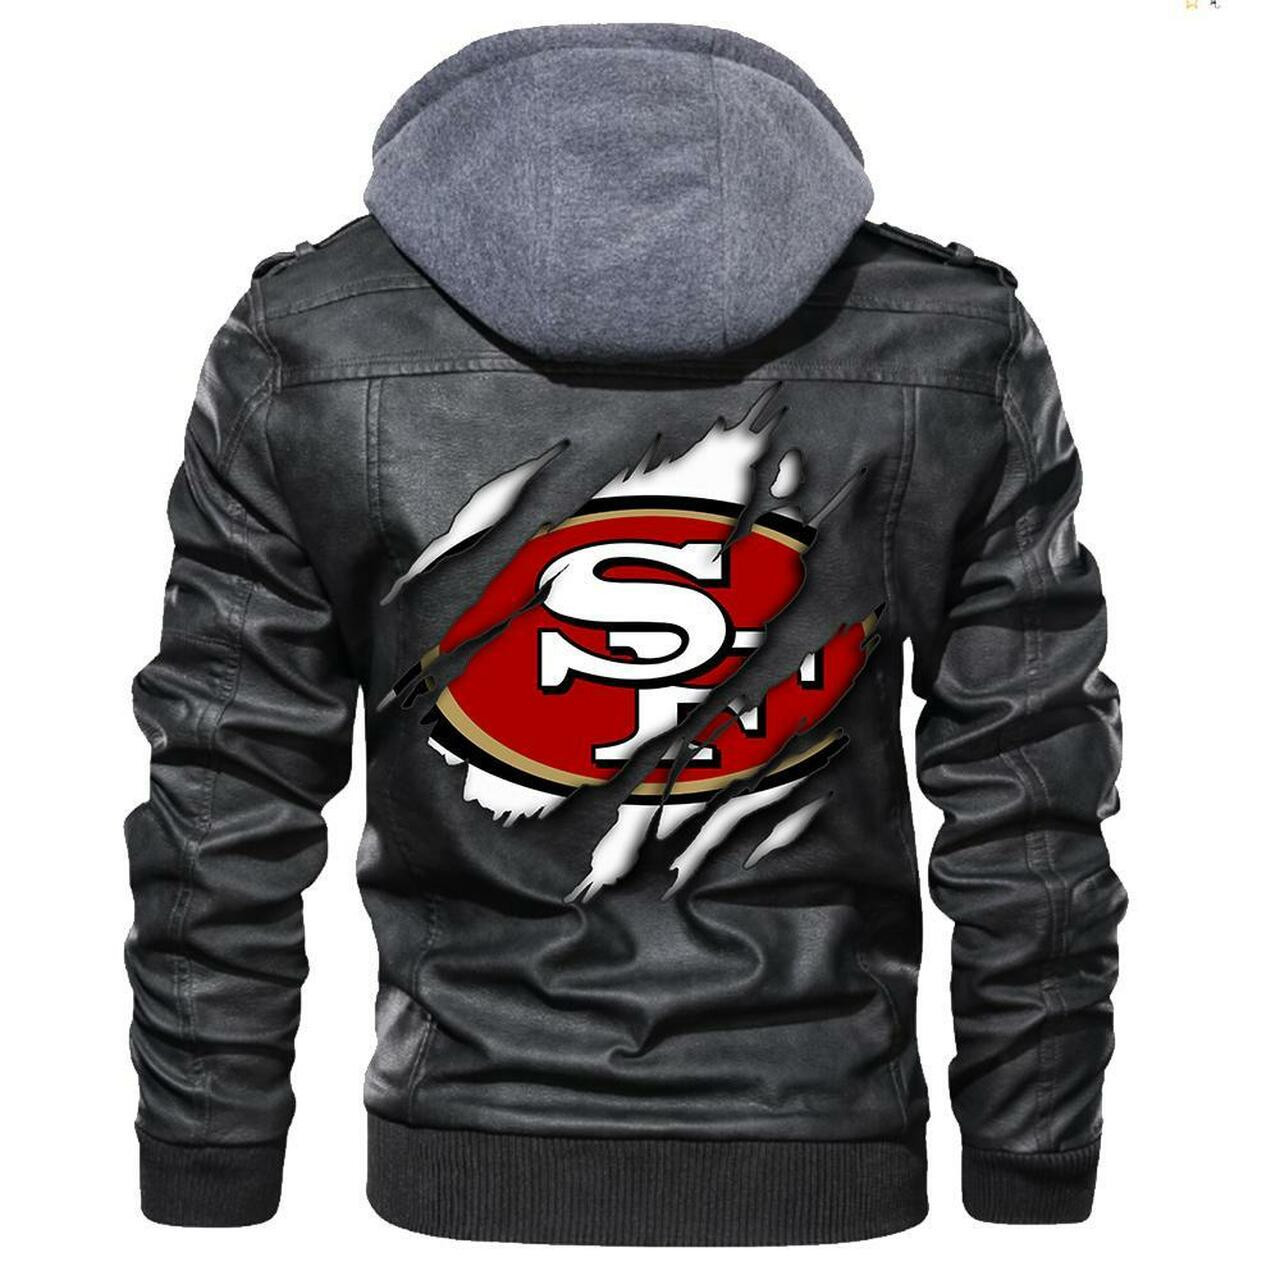 Top leather jacket Sells Best on Techcomshop 148